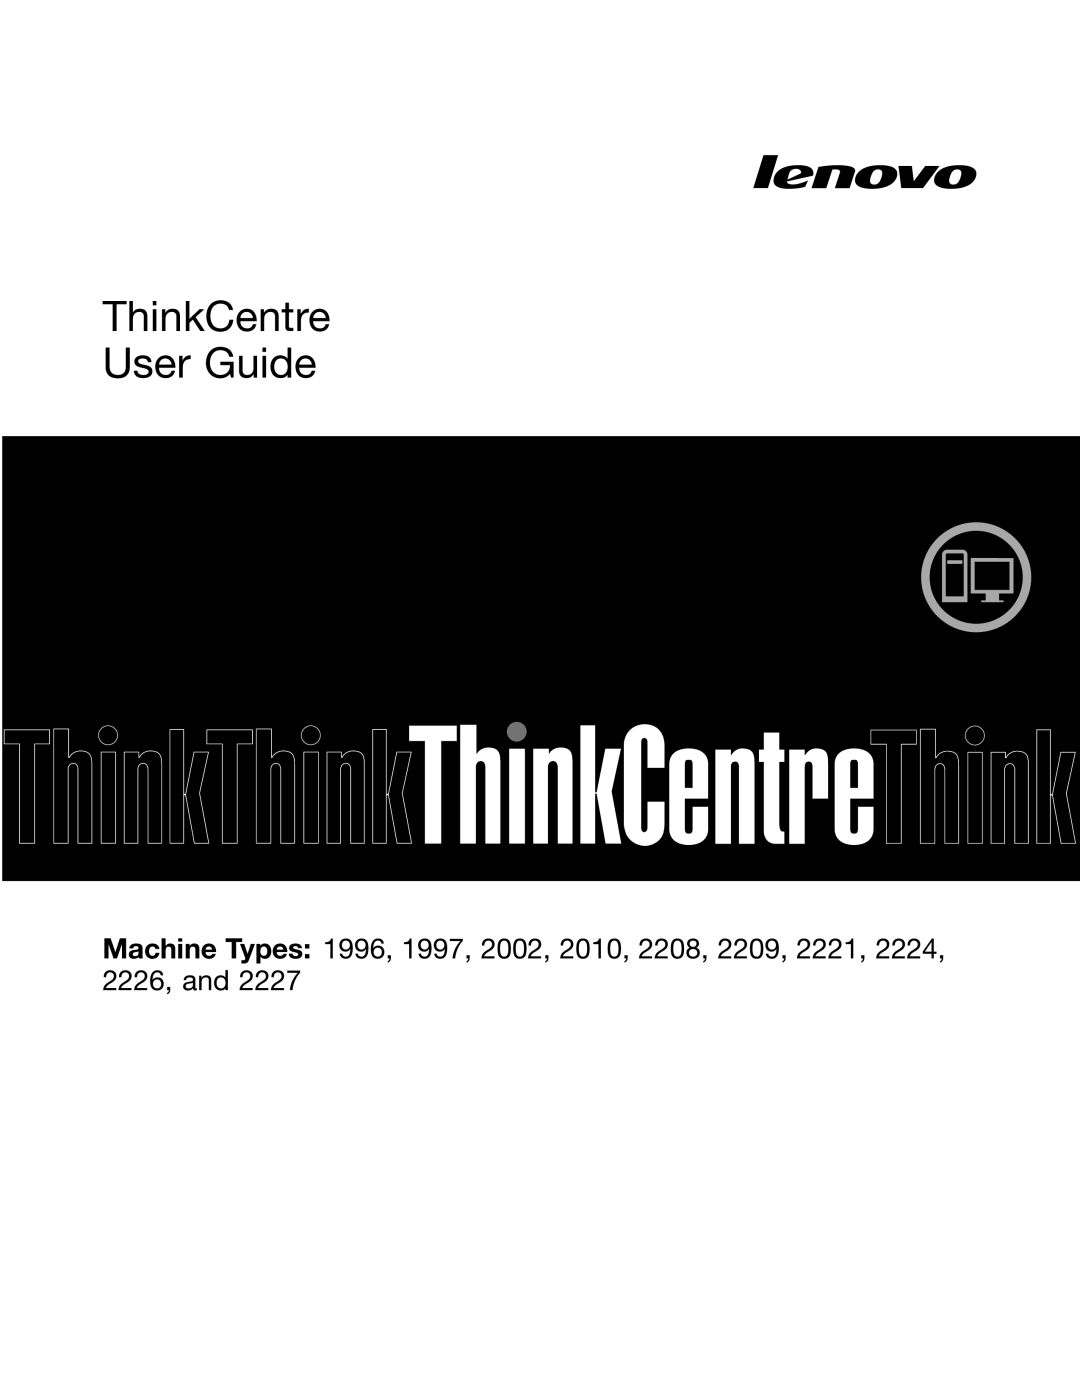 Lenovo 2226, 2224, 2208, 2221, 2209, 2227, 2010, 1996, 2002, 1997 manual ThinkCentre User Guide 